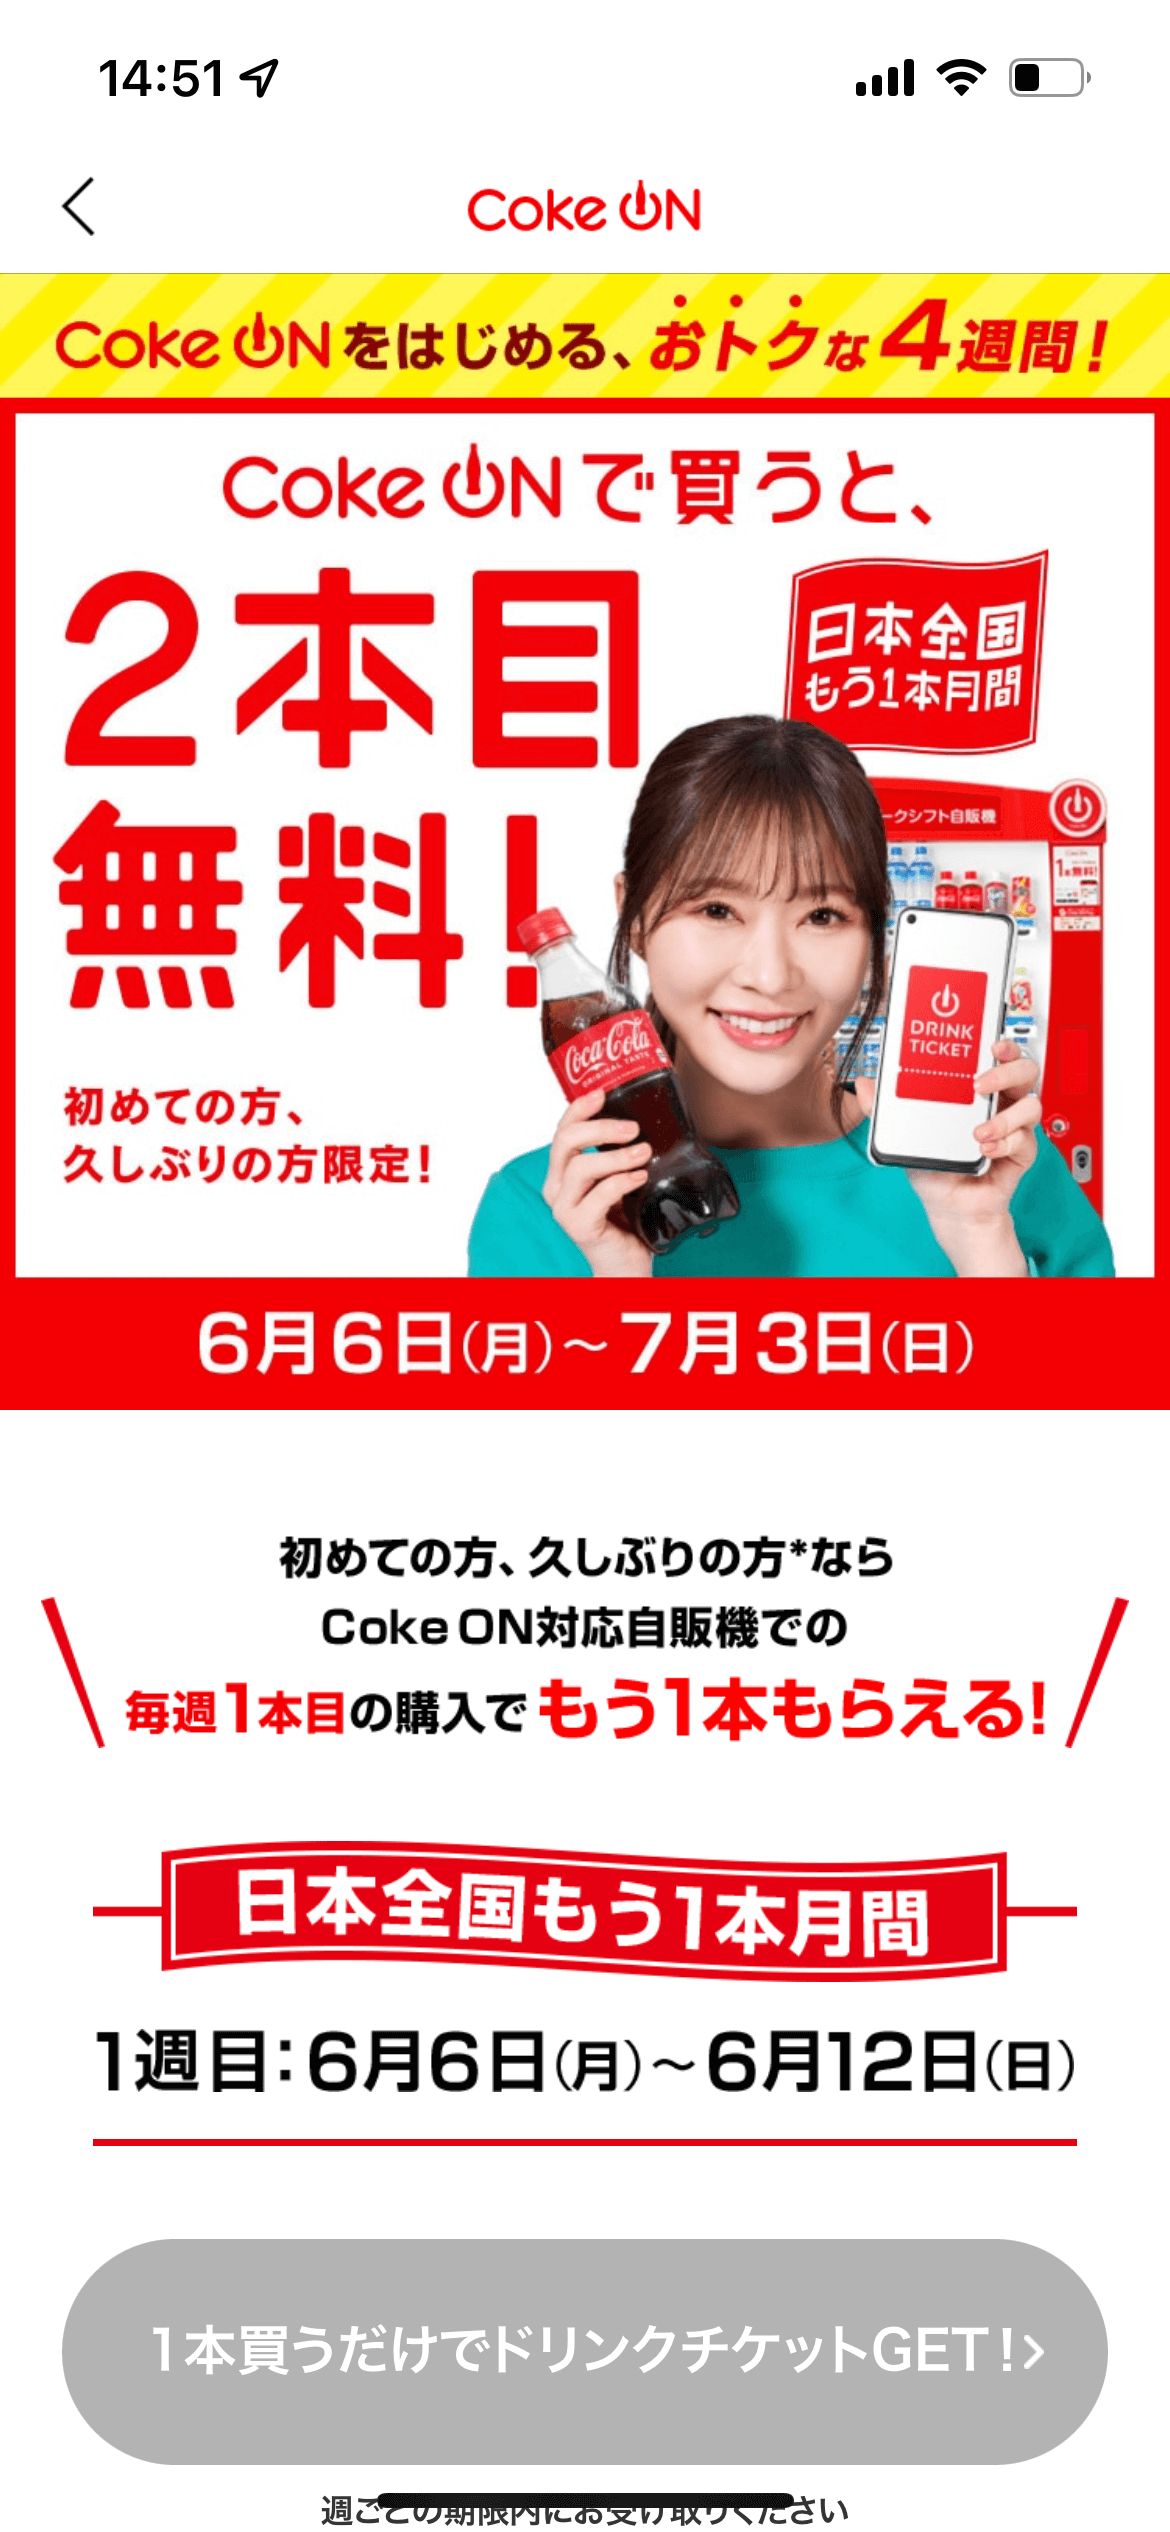 Coke ON 日本全国もう1本月間